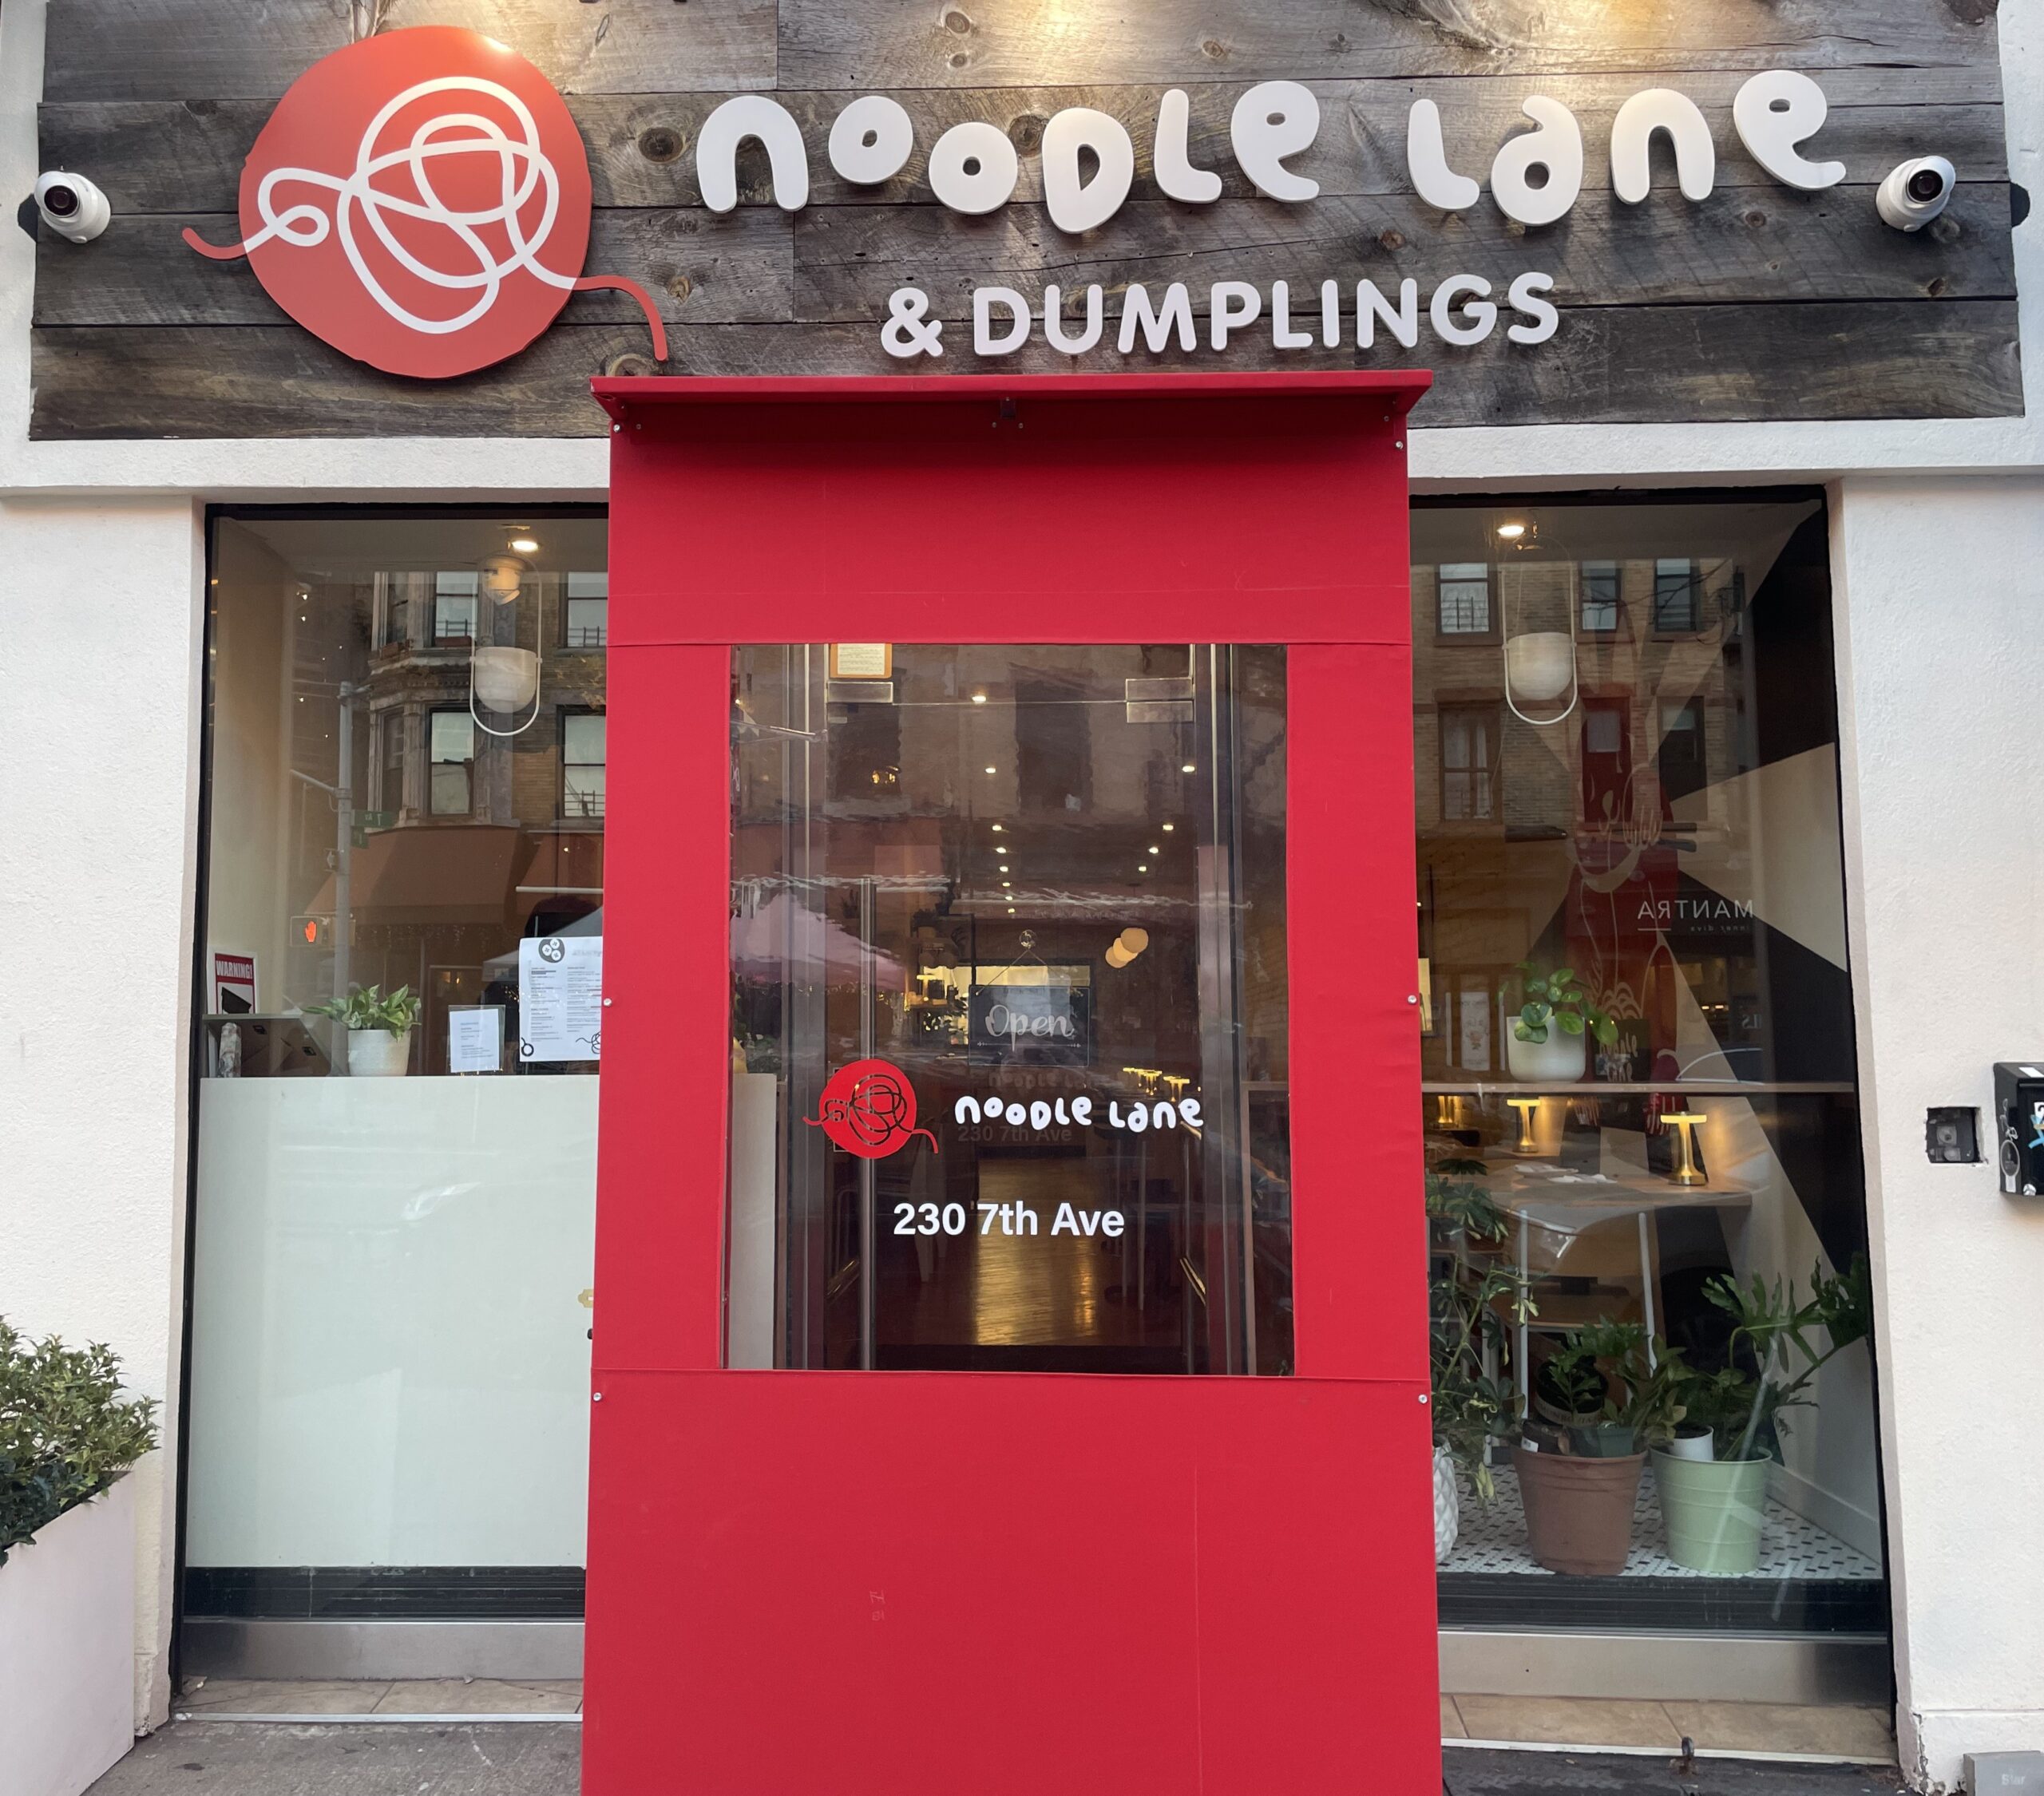 The storefront of Noodle Lane in Park Slope